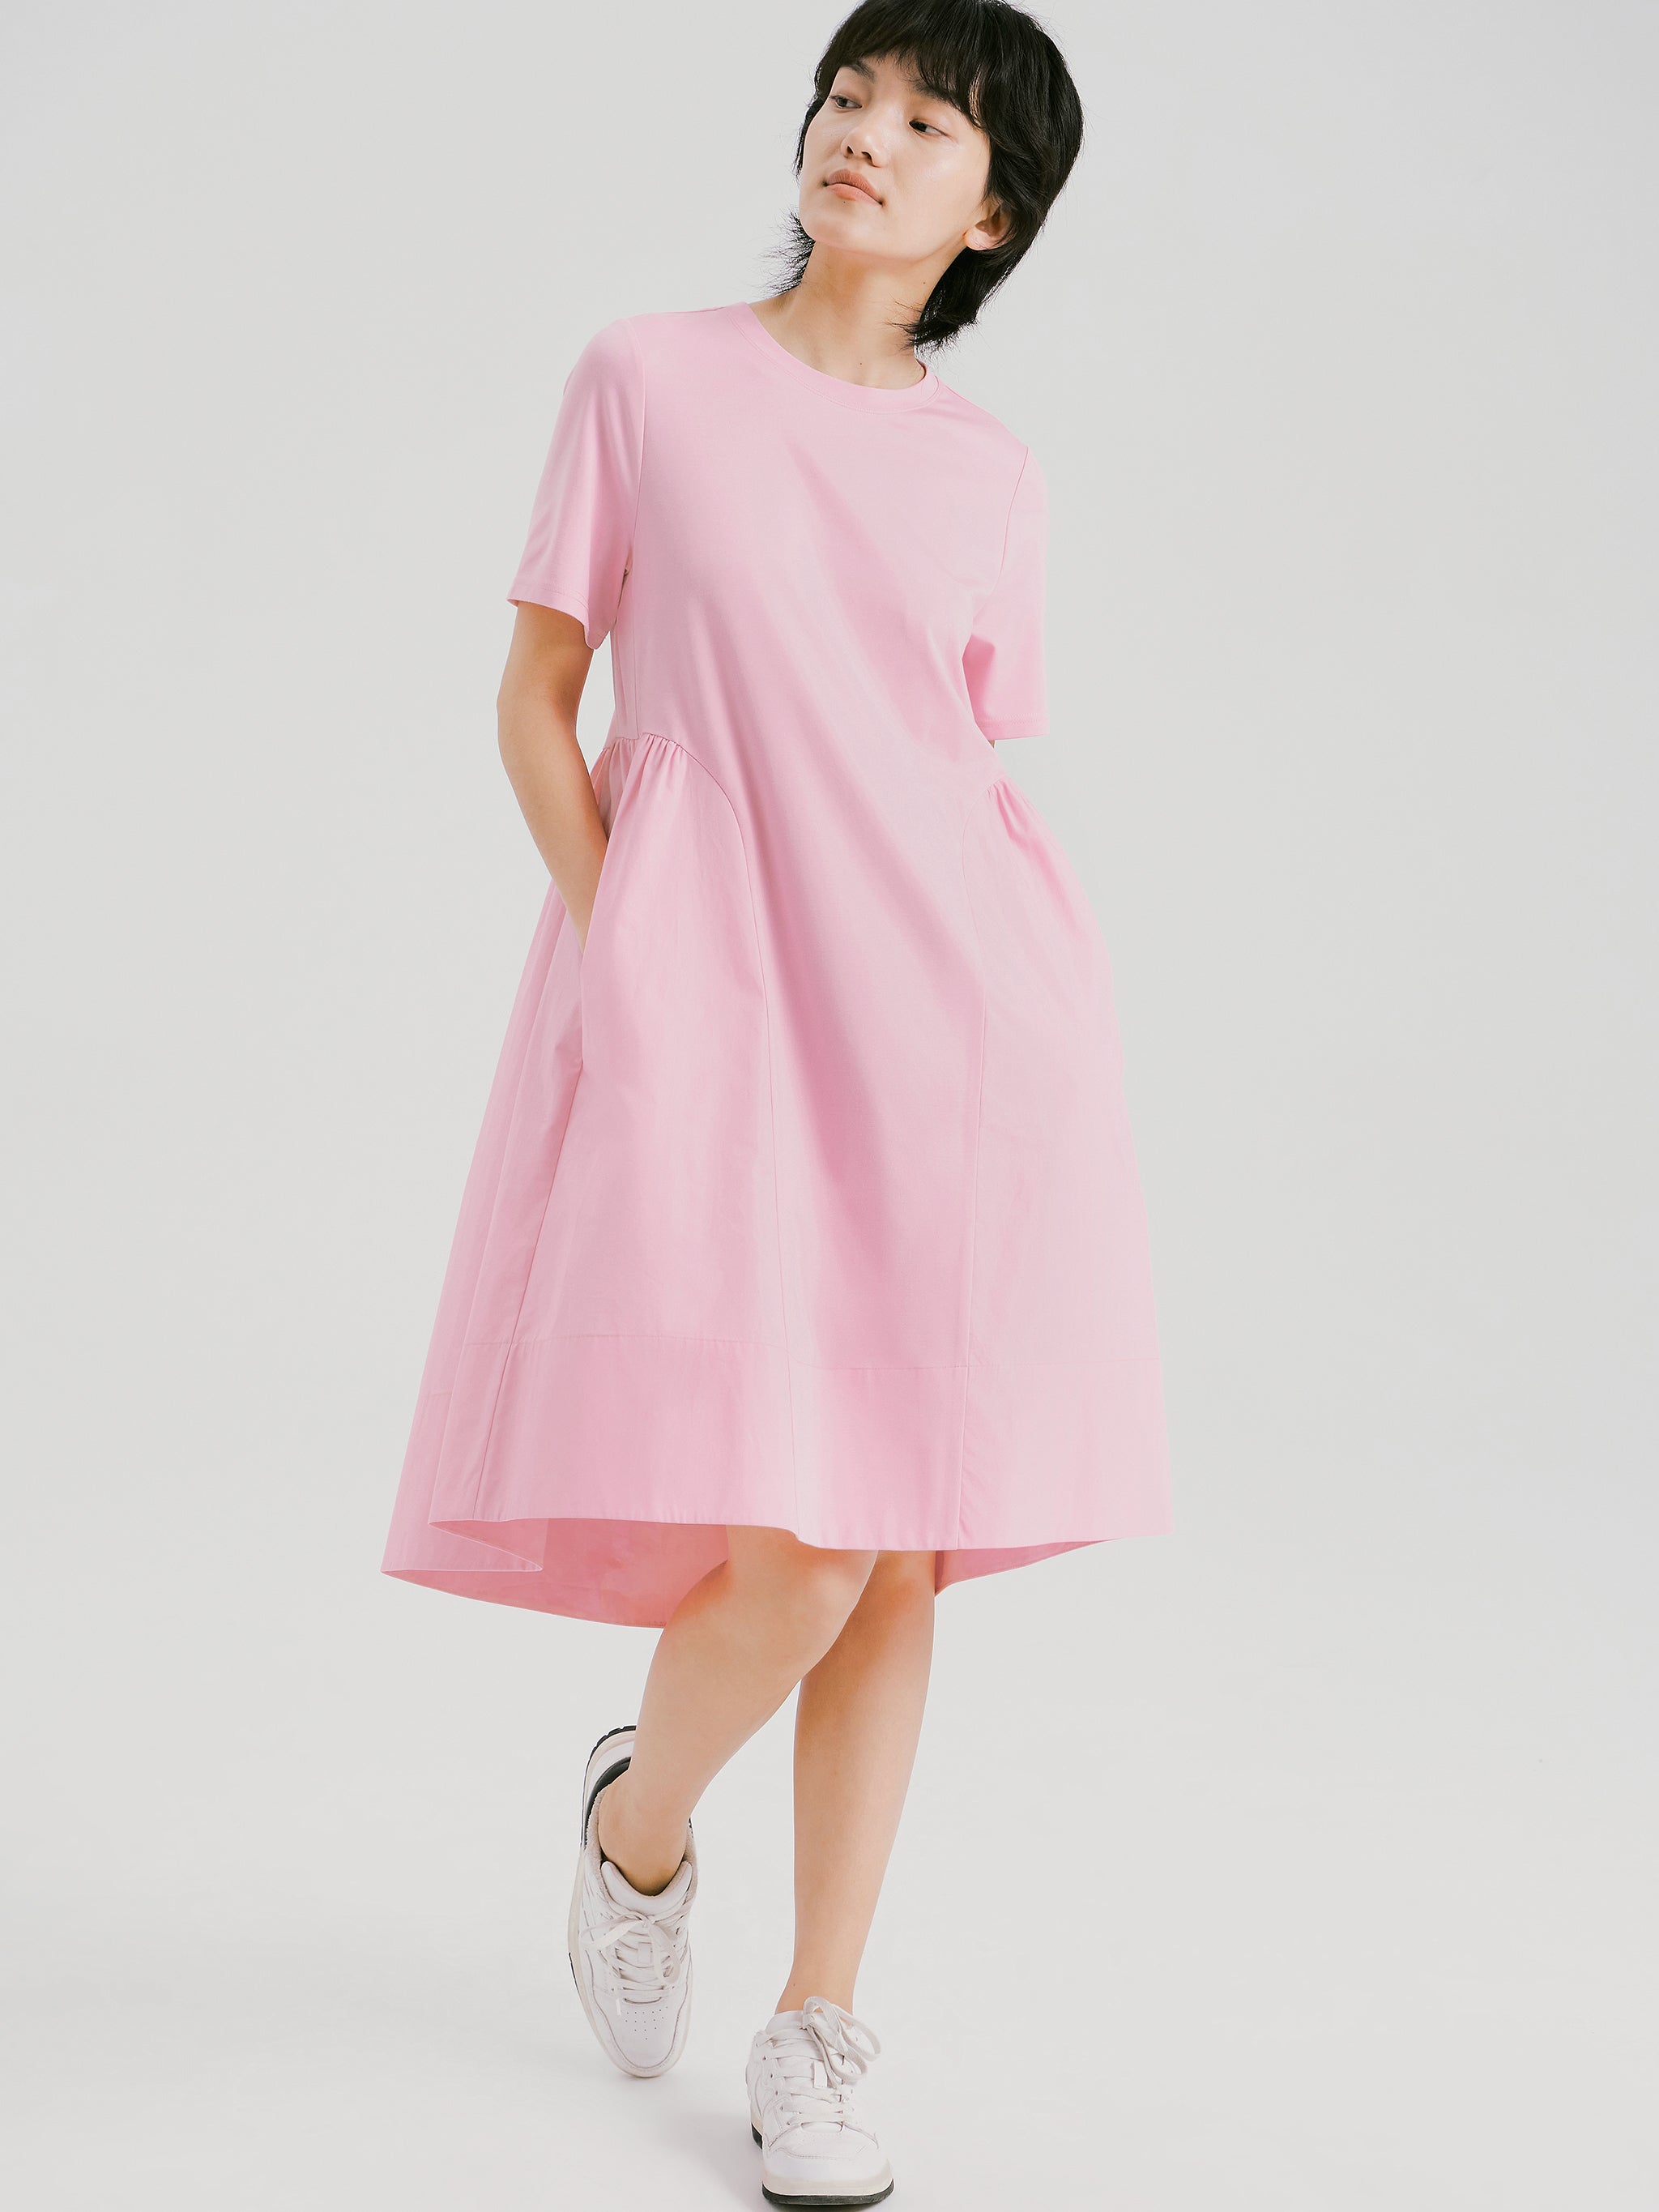 Simple Casual Beige Asymmetrical Cotton Dress - Belles Couture LLP